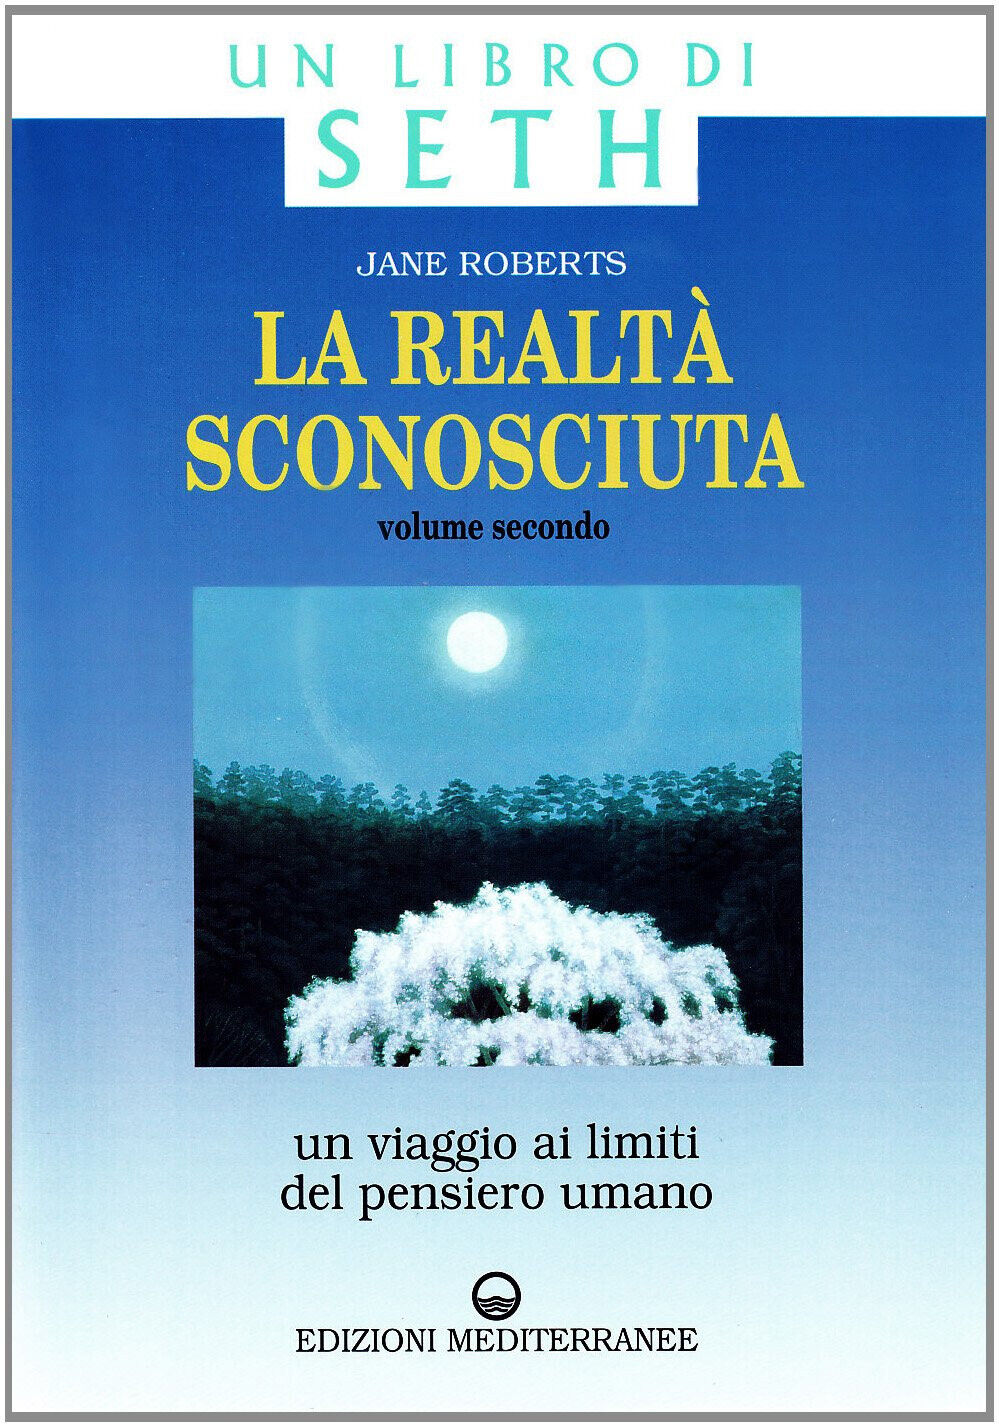 La realt? sconosciuta vol.2 -Jane Roberts - Edizioni mediterranee, 1997